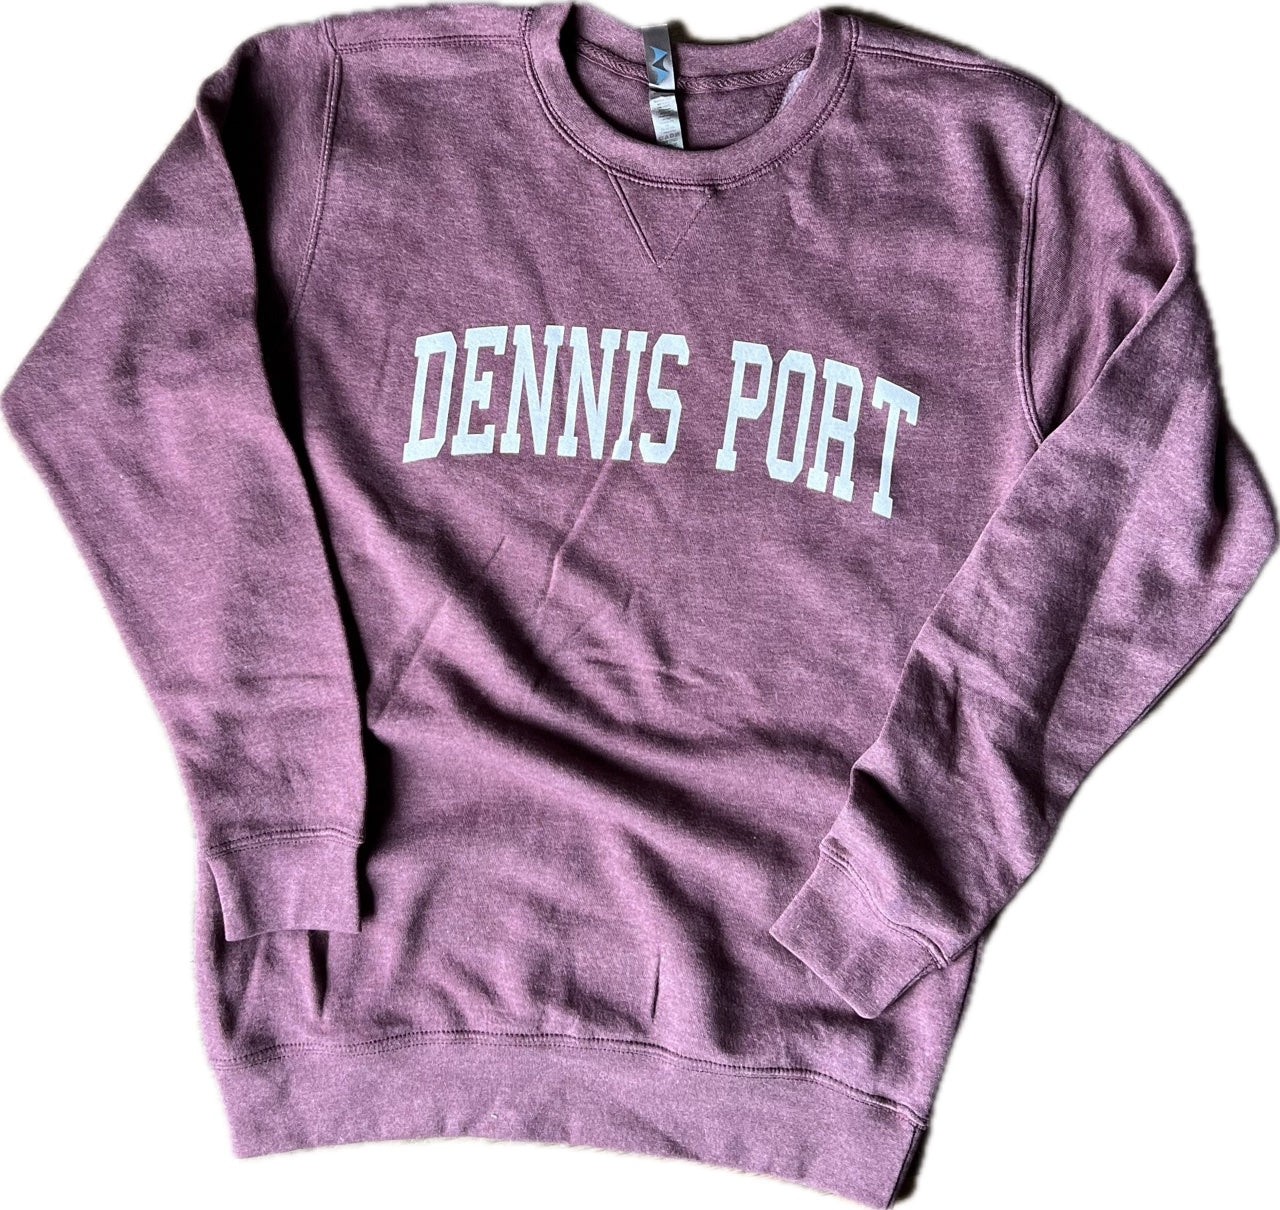 The perfect unisex Dennis Port crew neck in the color plum